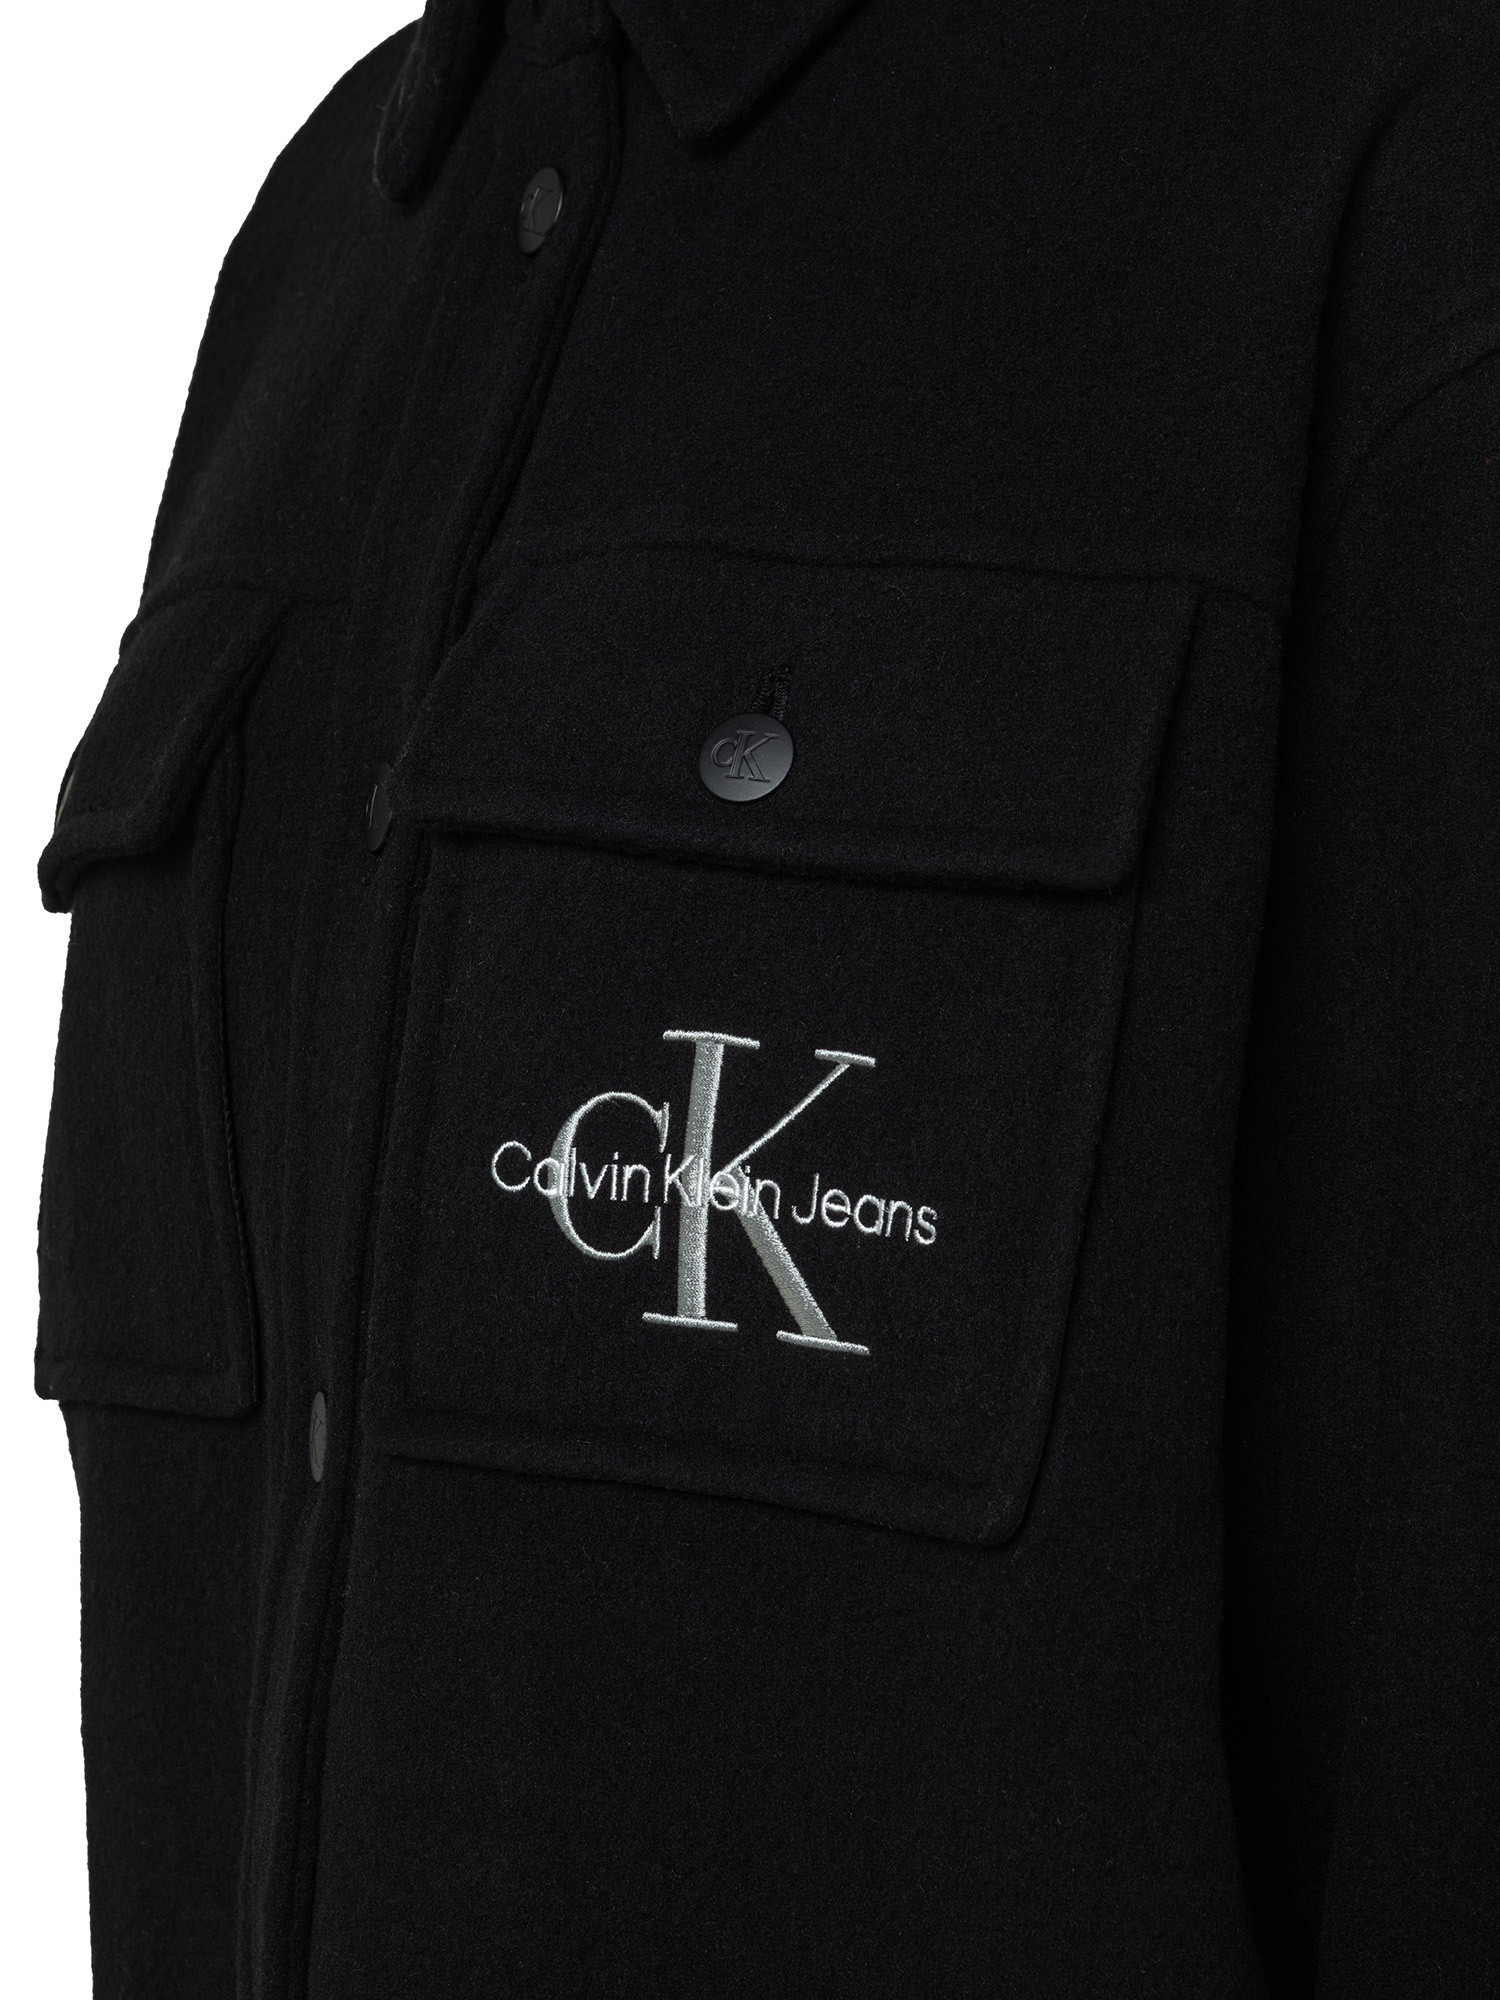 Calvin Klein Jeans - Jacket with logo, Black, large image number 2